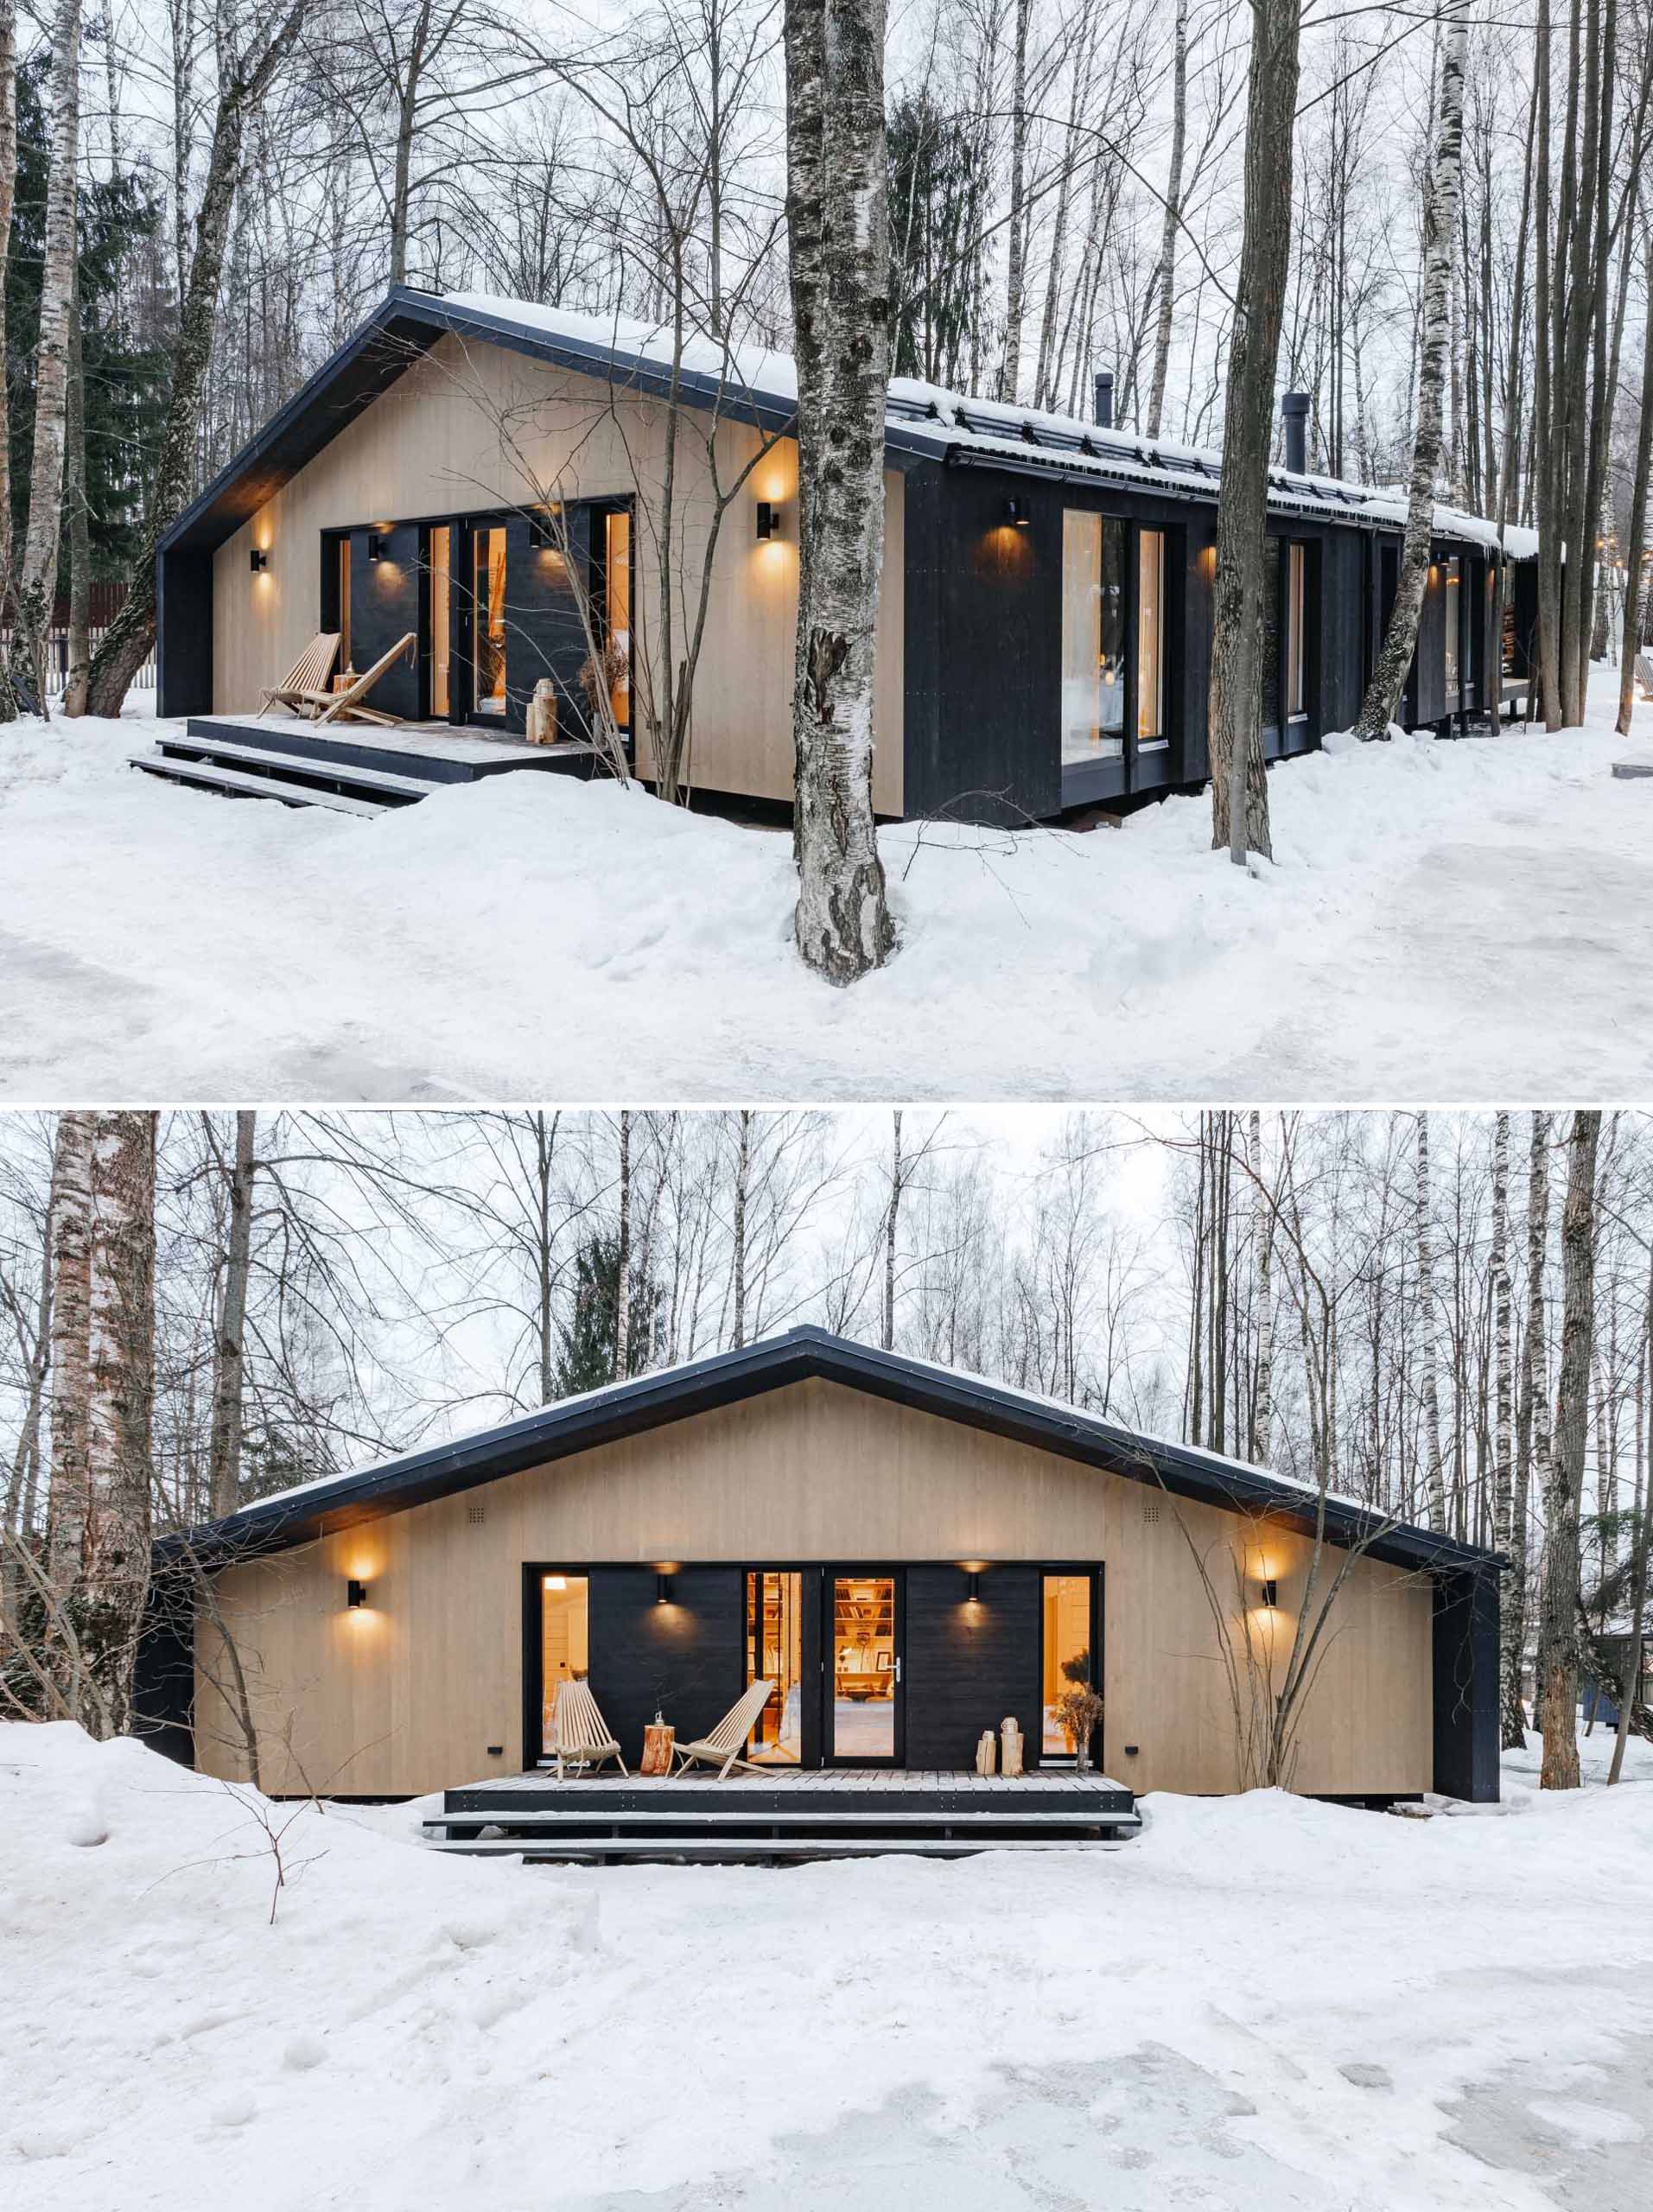 A modern modular home inspired by a wooden barn.